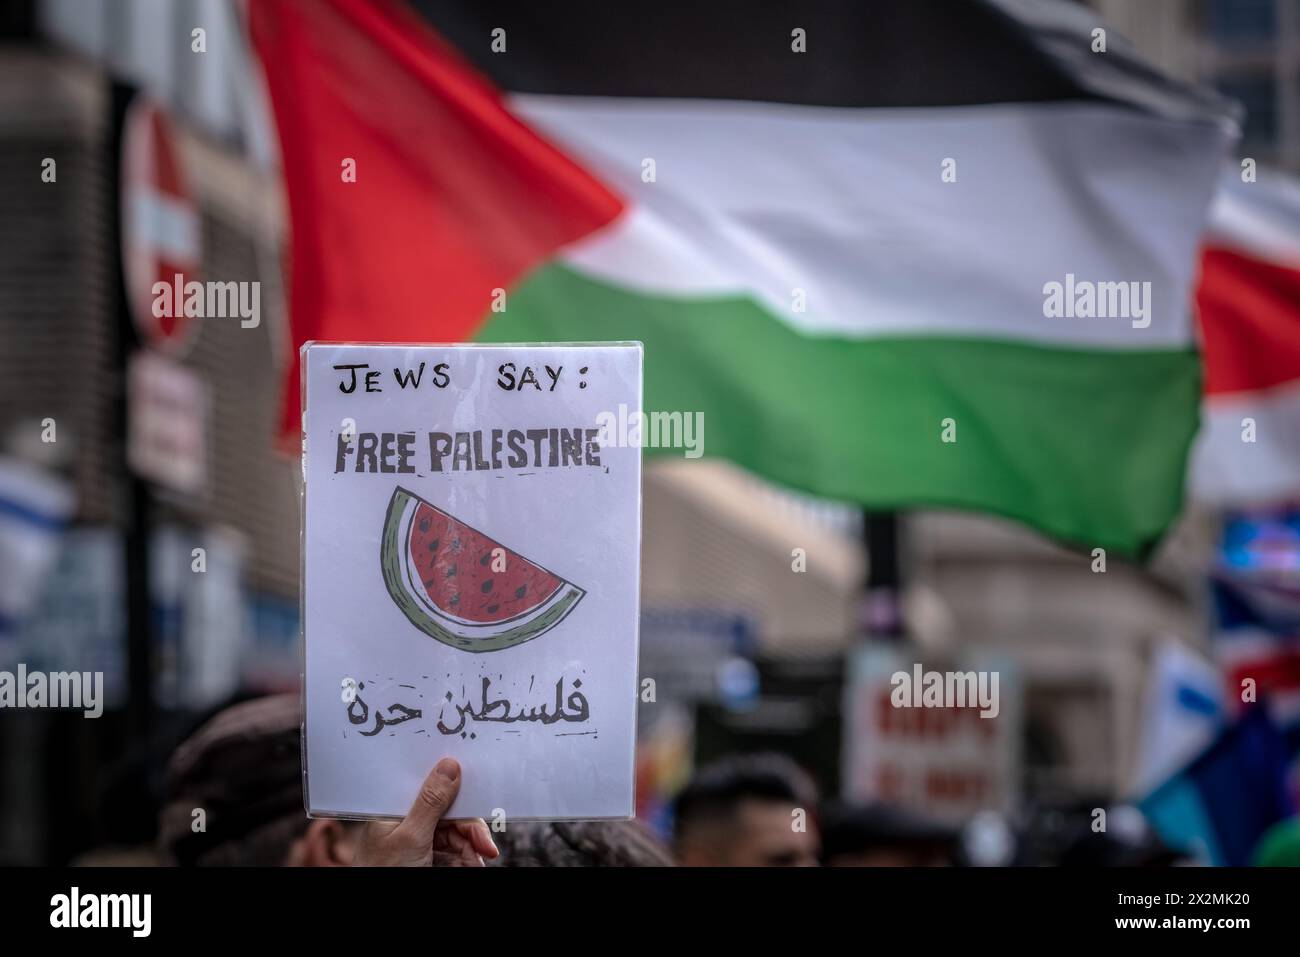 Pro-Palestine supporters demonstrate near Barclays bank on Tottenham Court Road, London, UK. Stock Photo